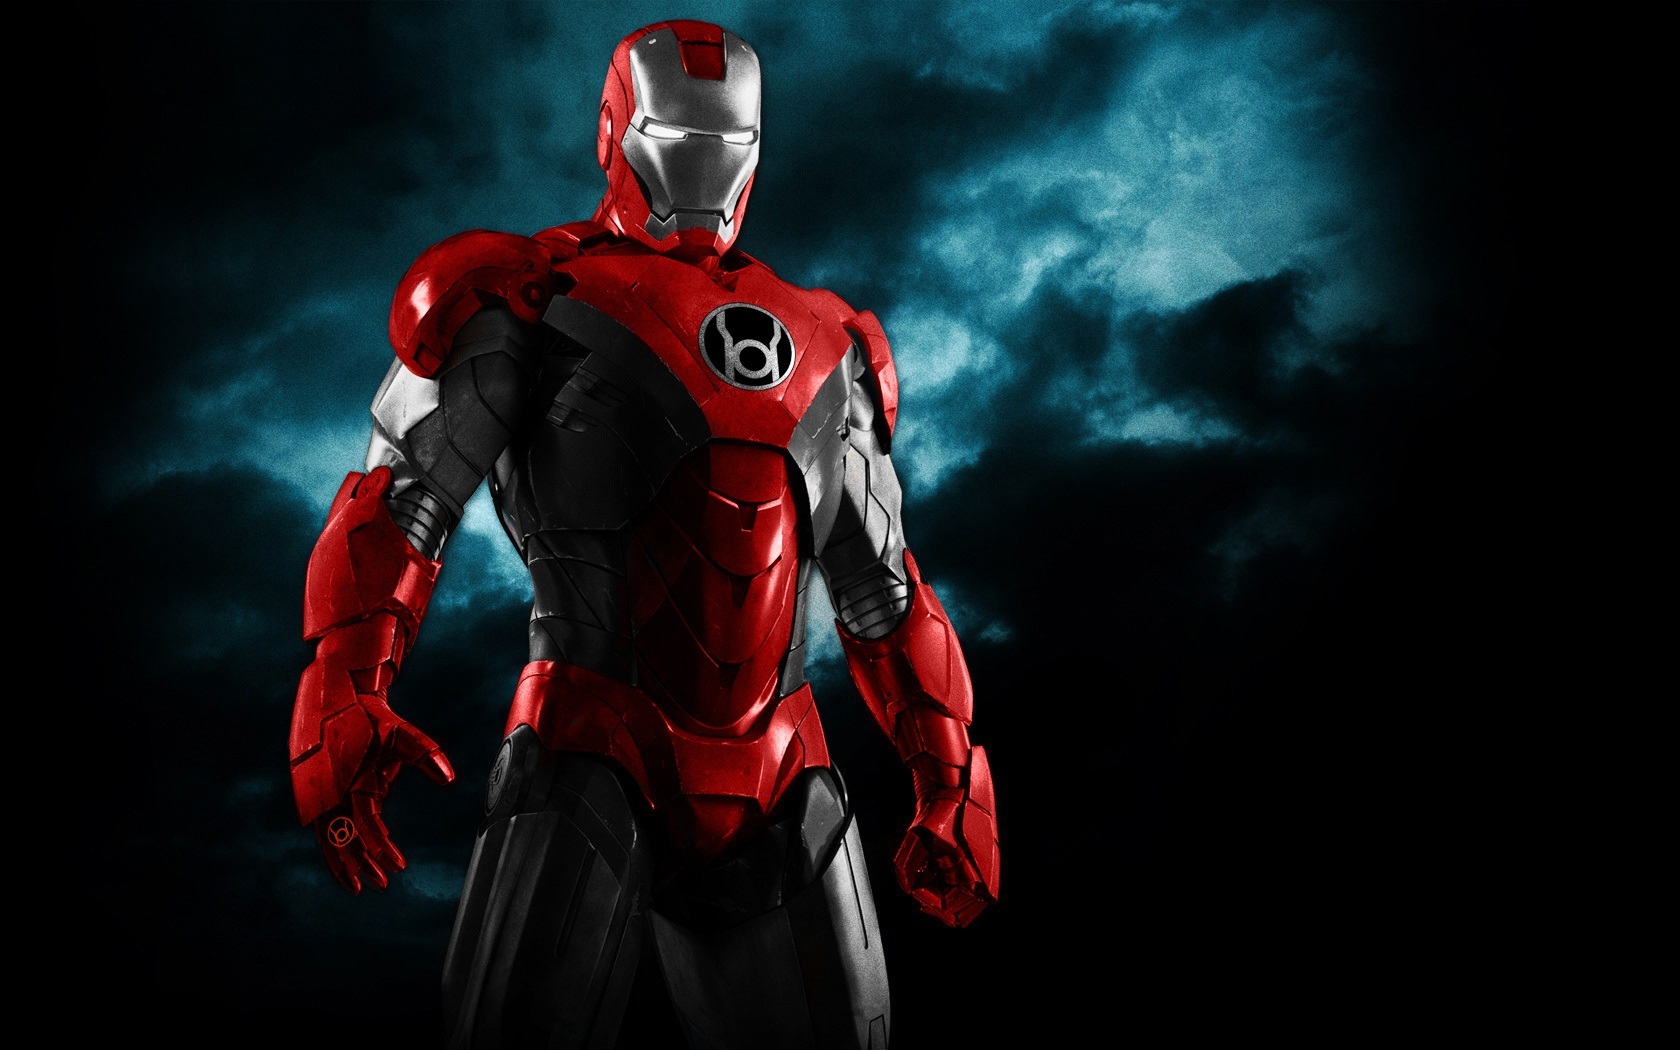 Iron Man Red Lantern Armor By 666darks